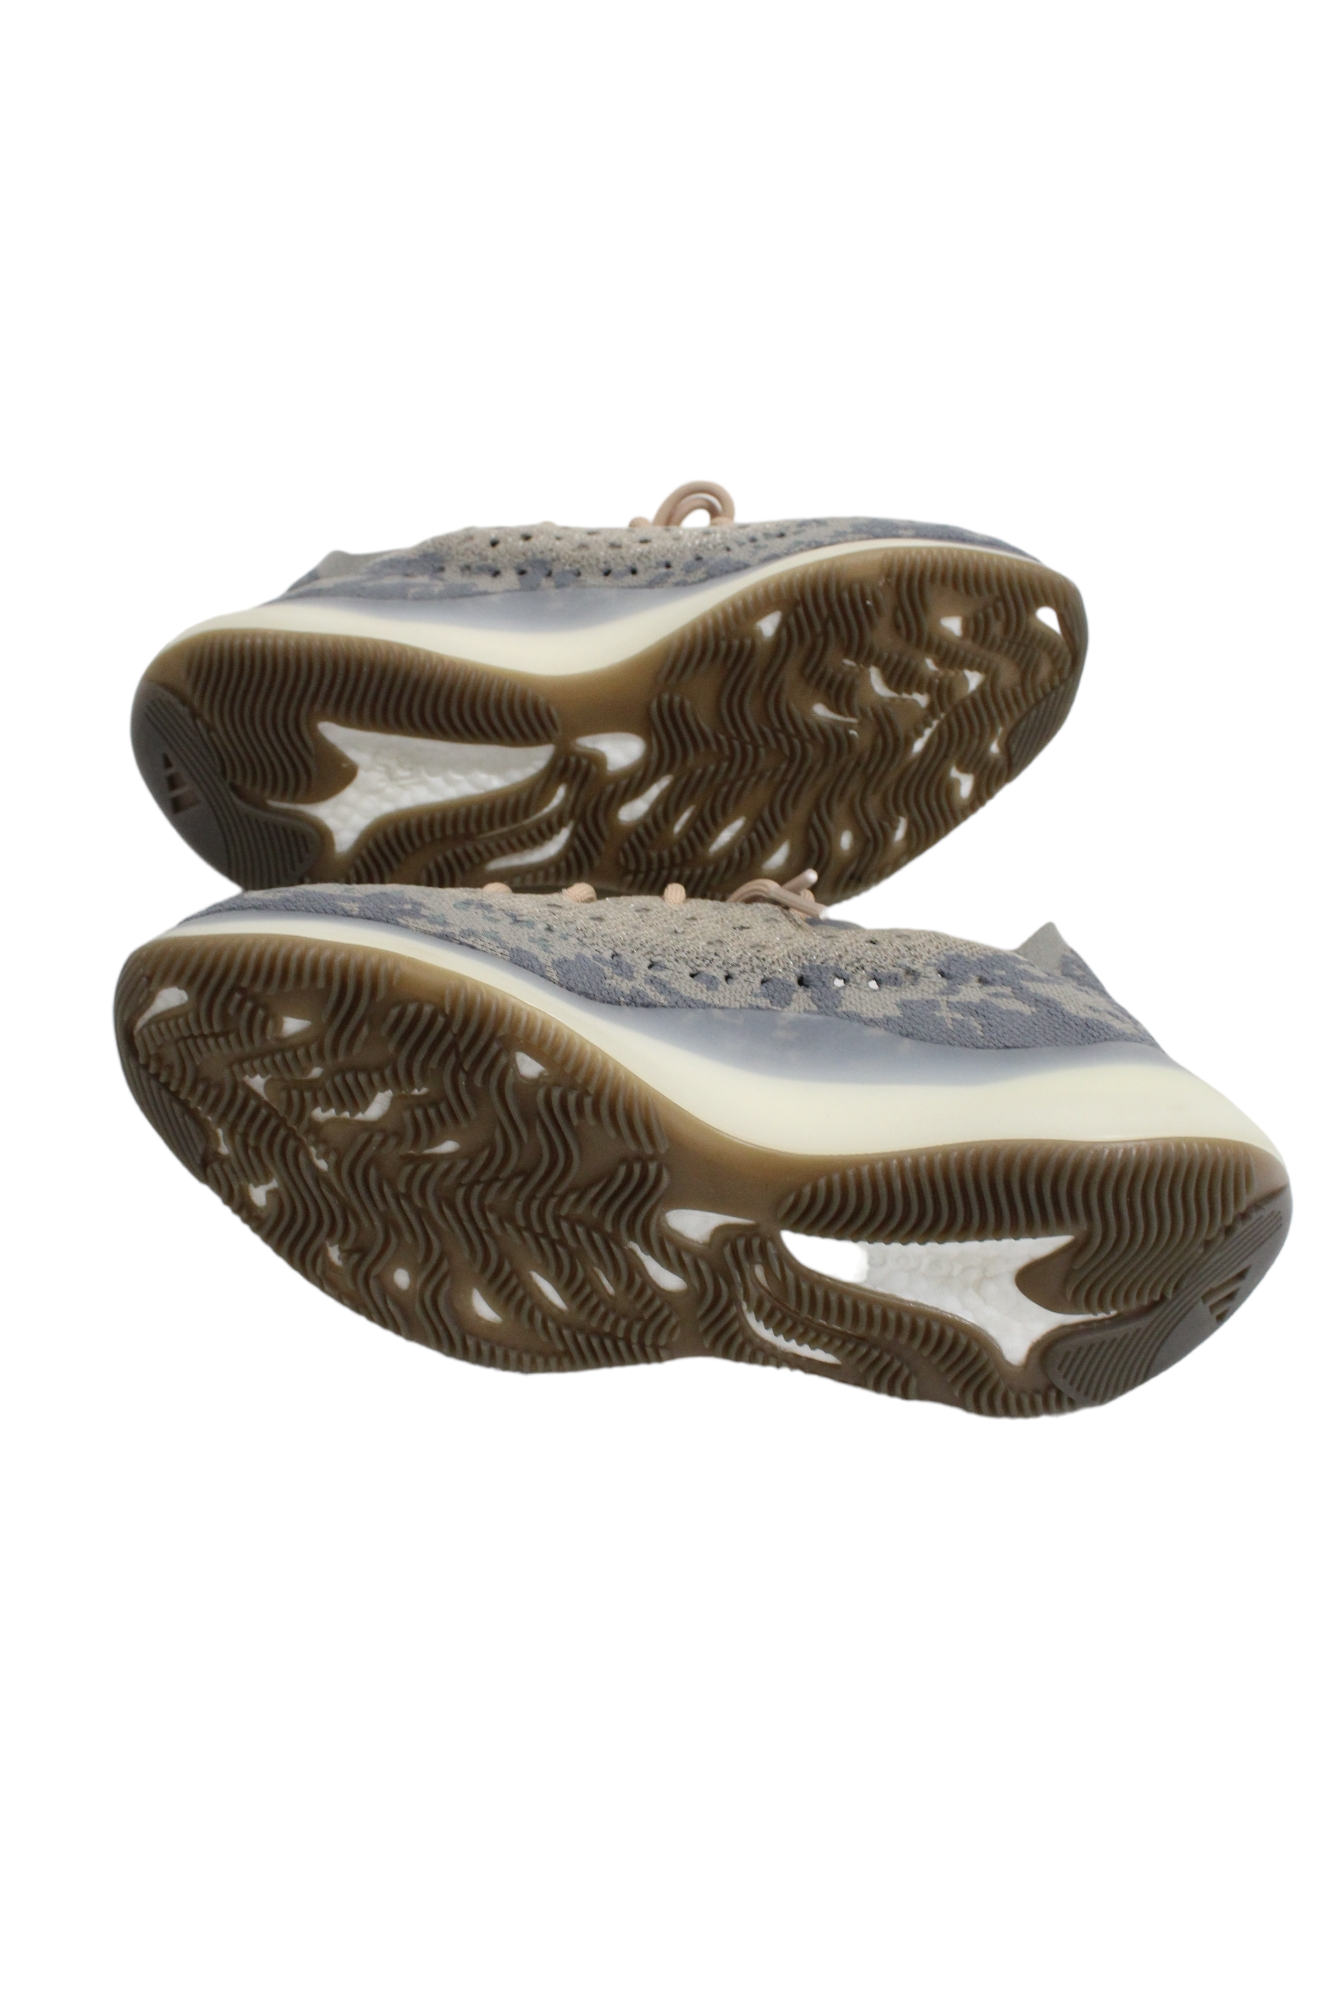 Yeezy Boost Adidas 380 Mist Non Reflective Sneakers | Men's 10